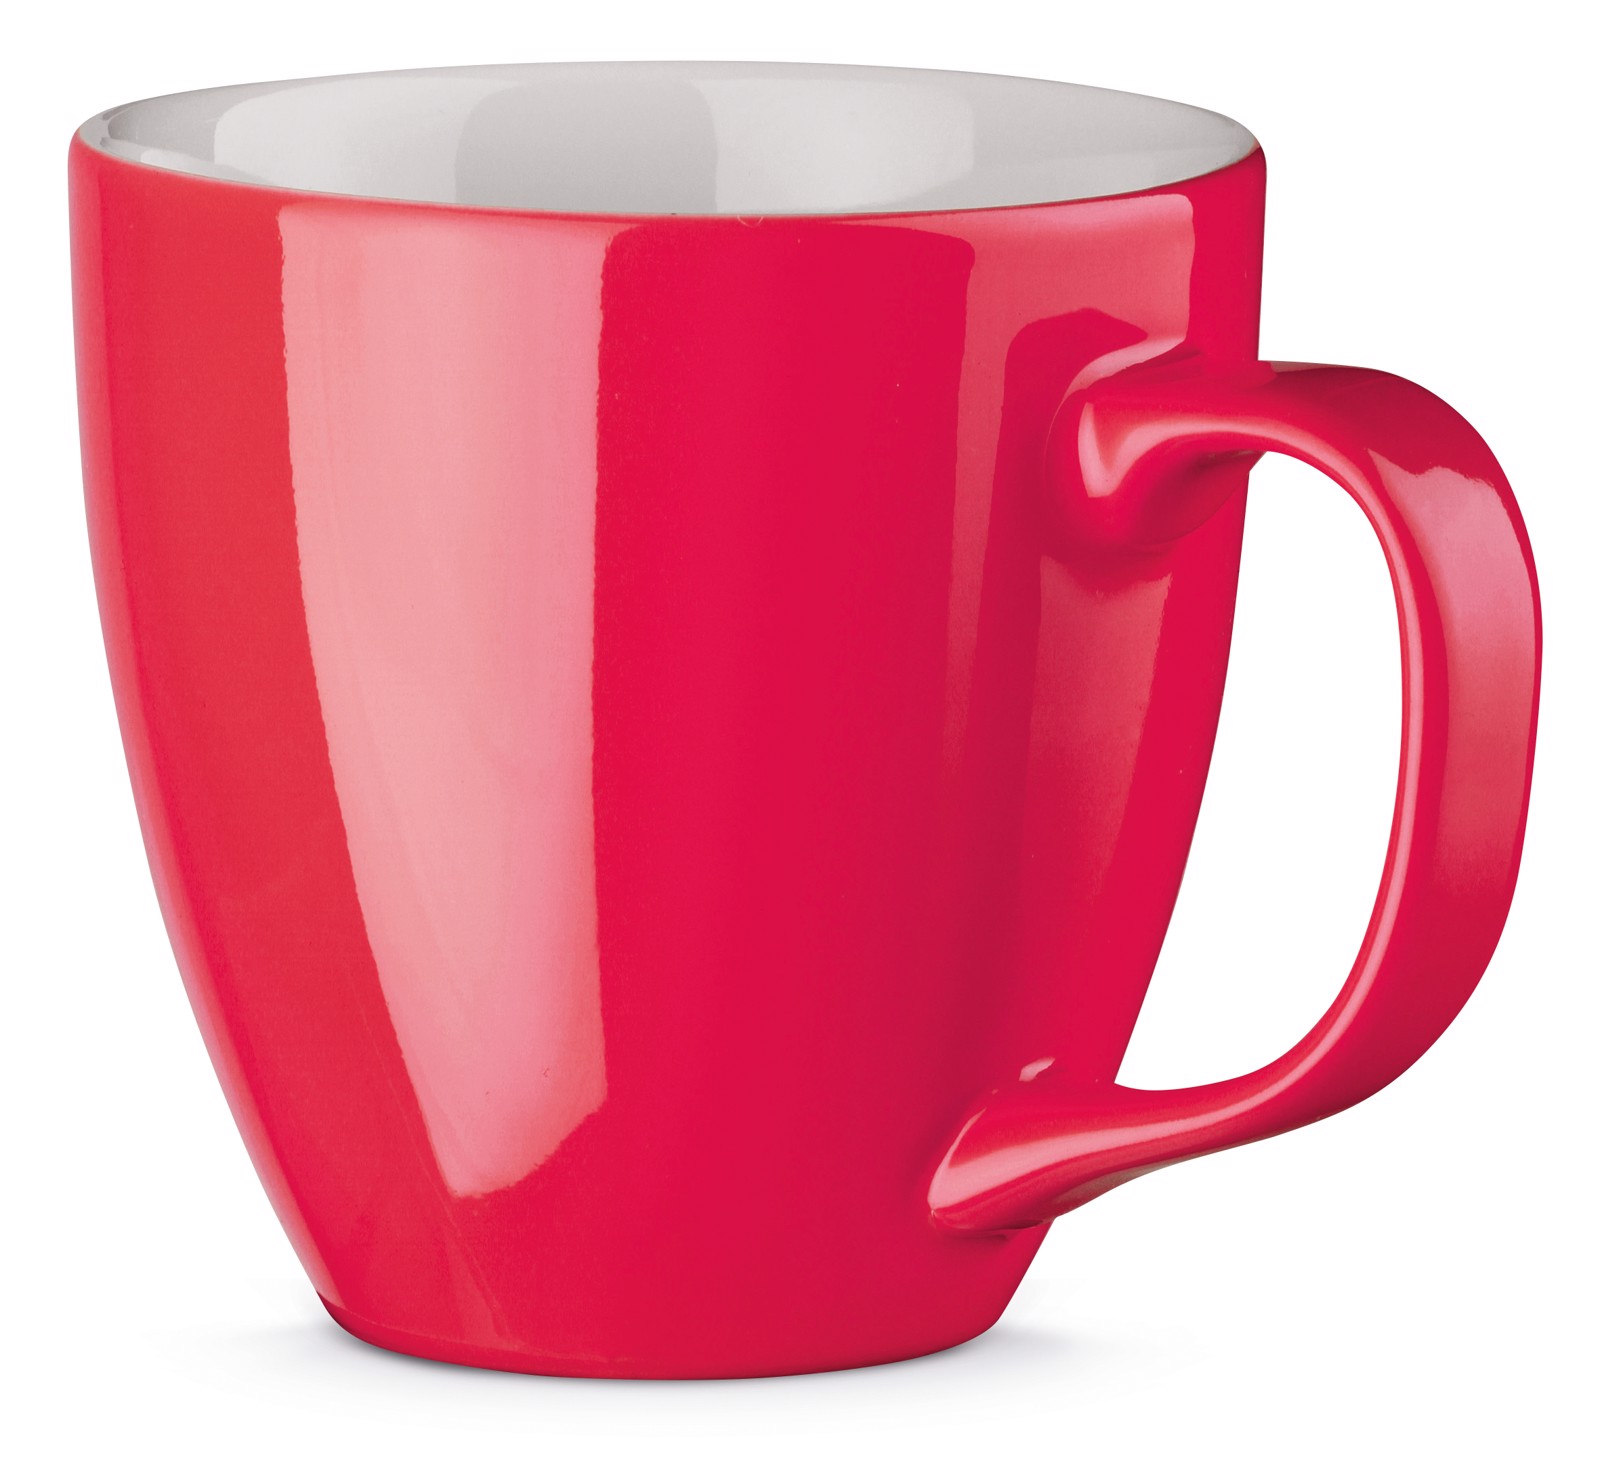 PANTHONY. Porcelain mug 450 ml - Pink